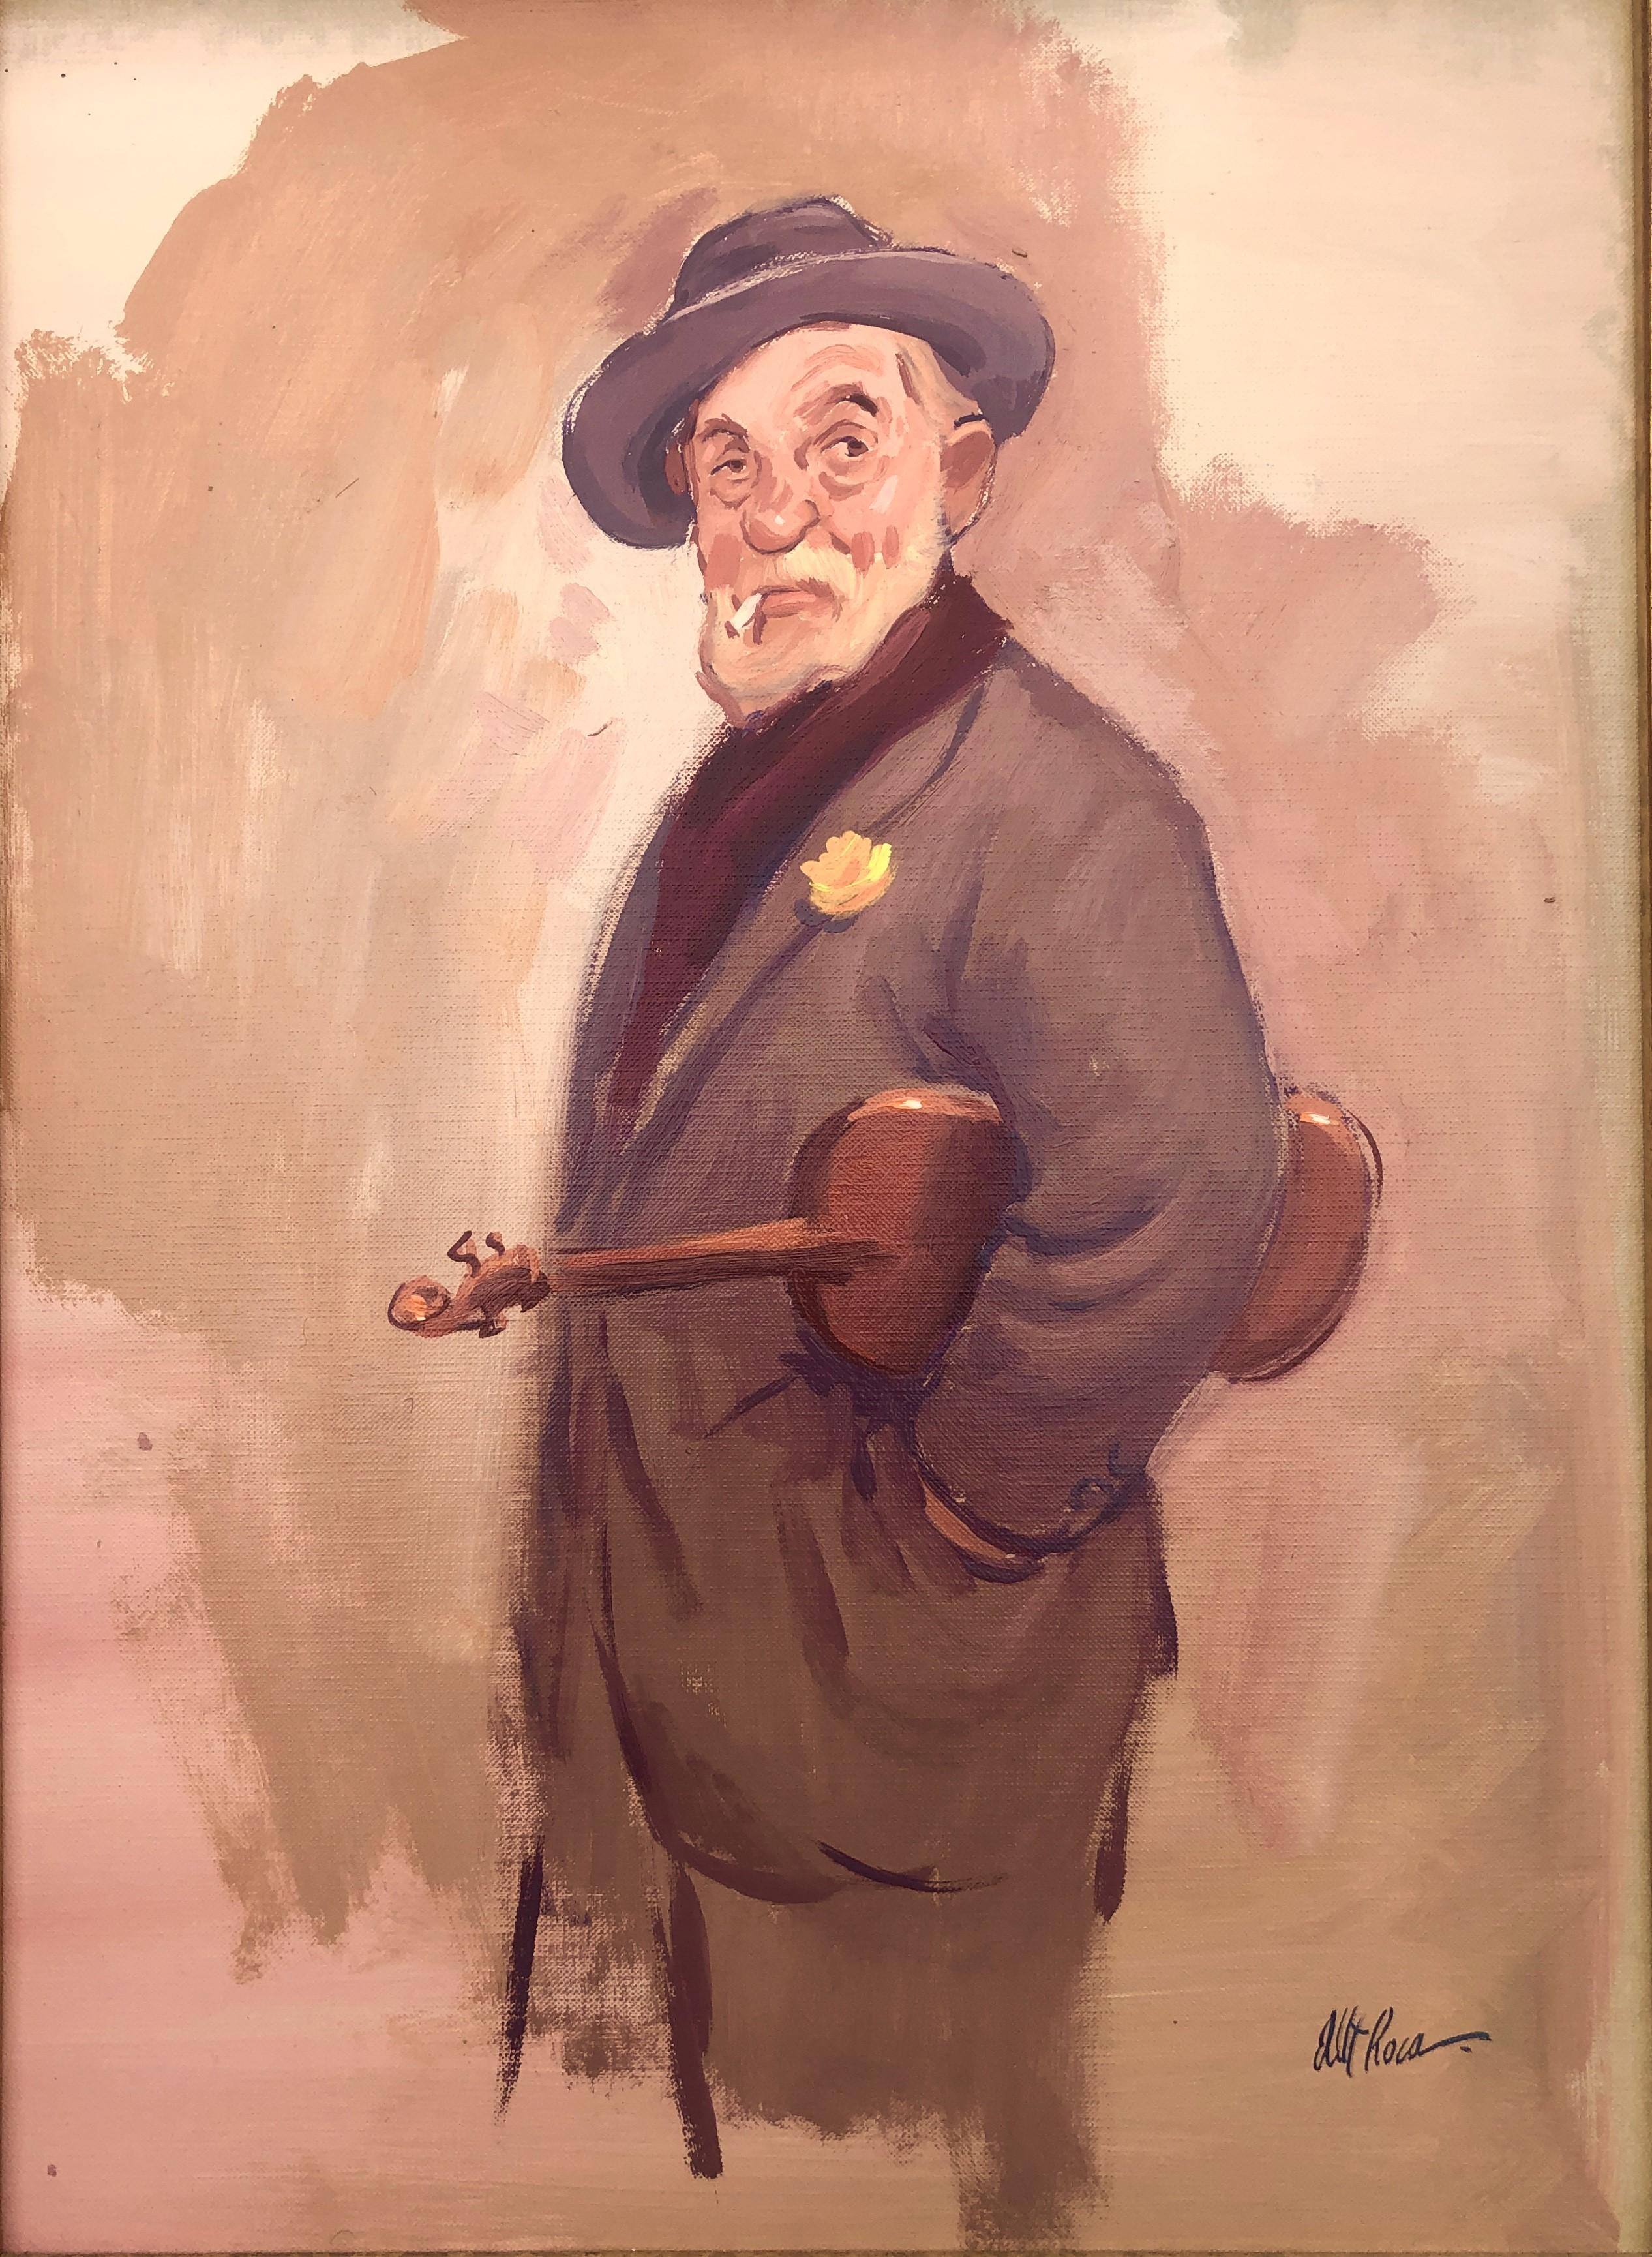 Albert Roca Portrait Painting - violinist oil on board painting modernism art